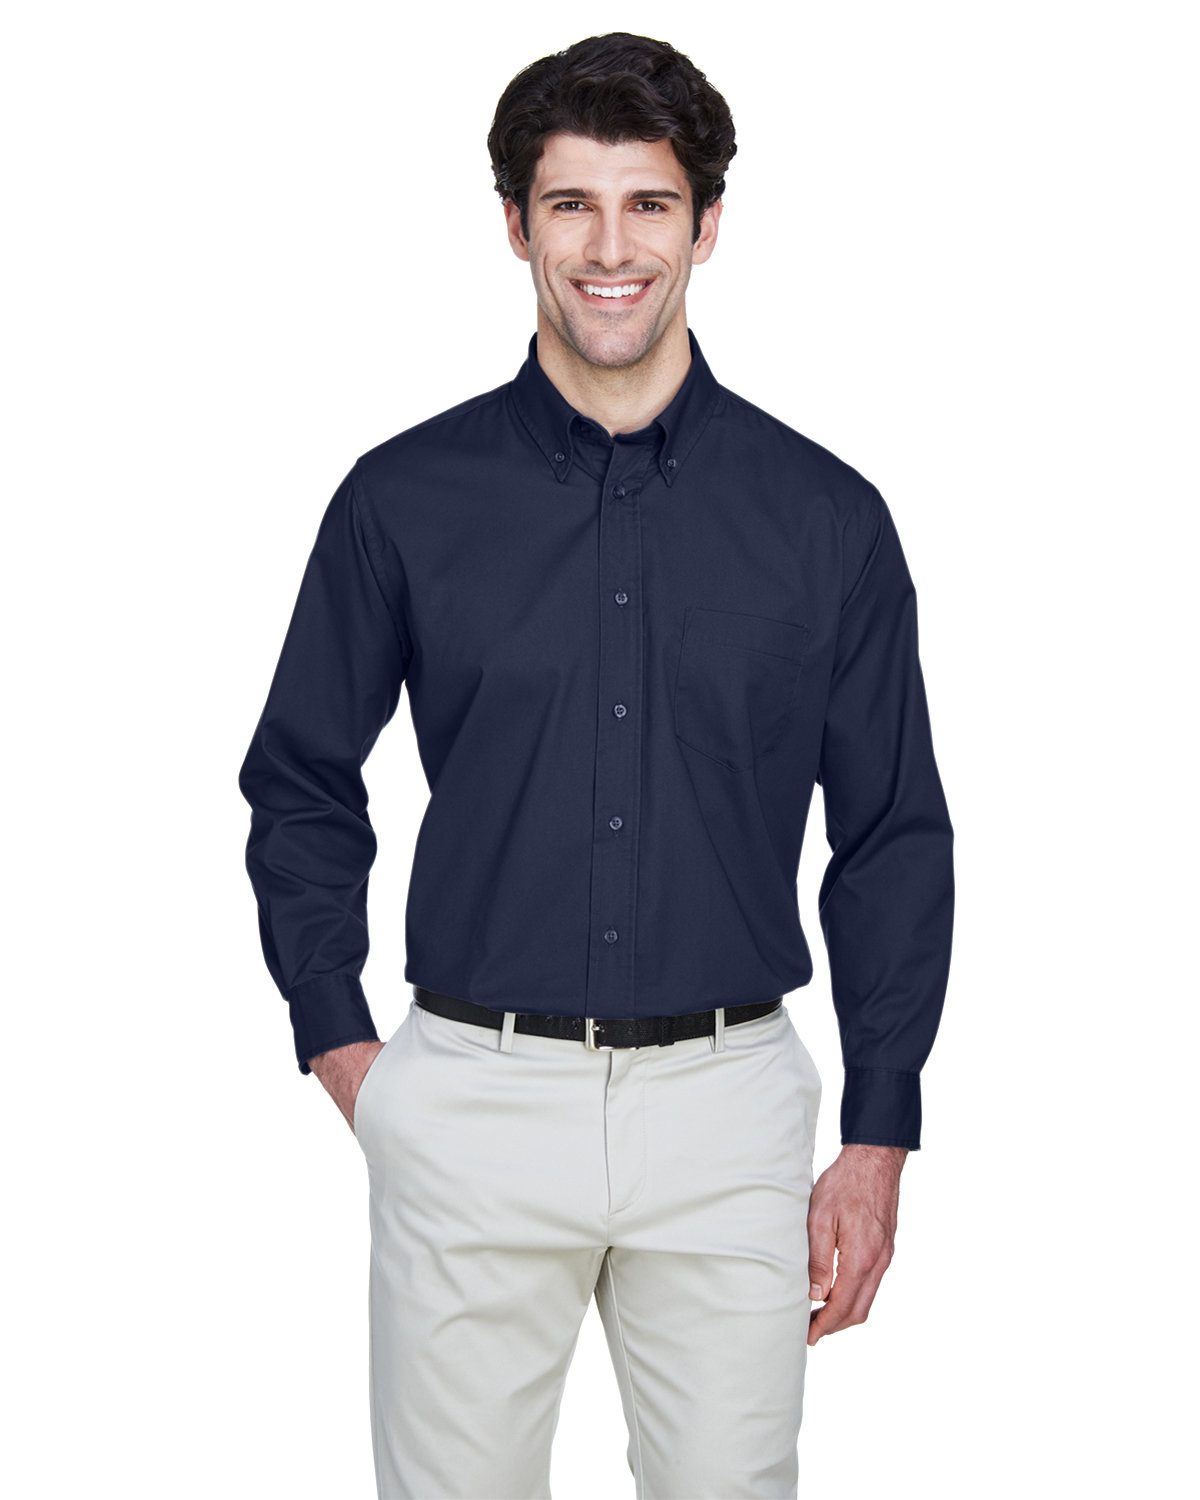 Ultra club - Men's whisper twill shirt - style 8975